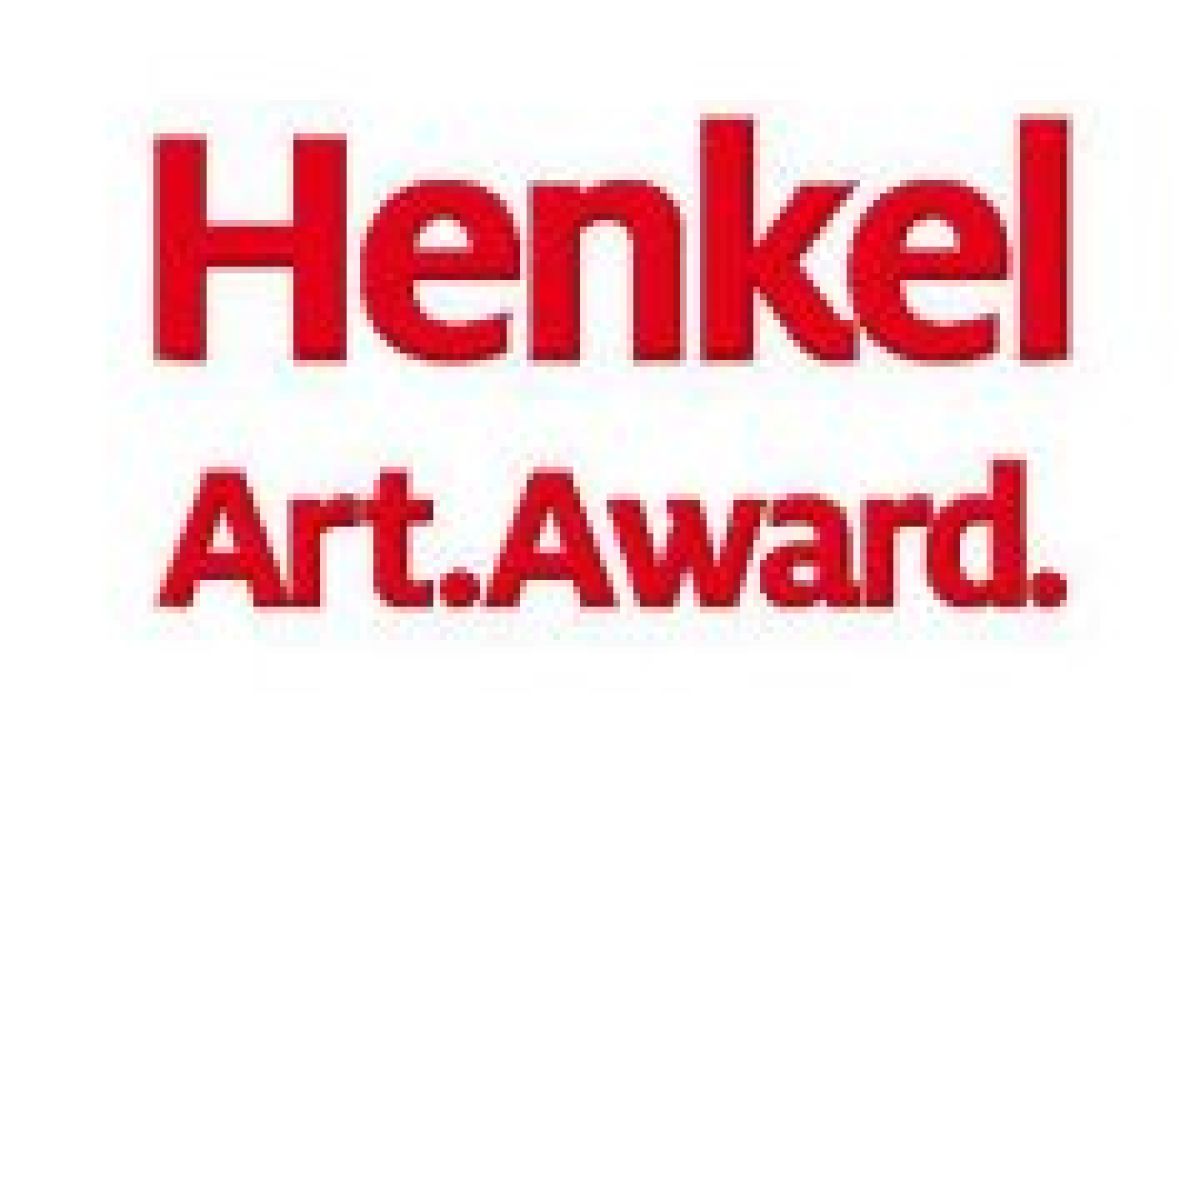 Henkel Art Award